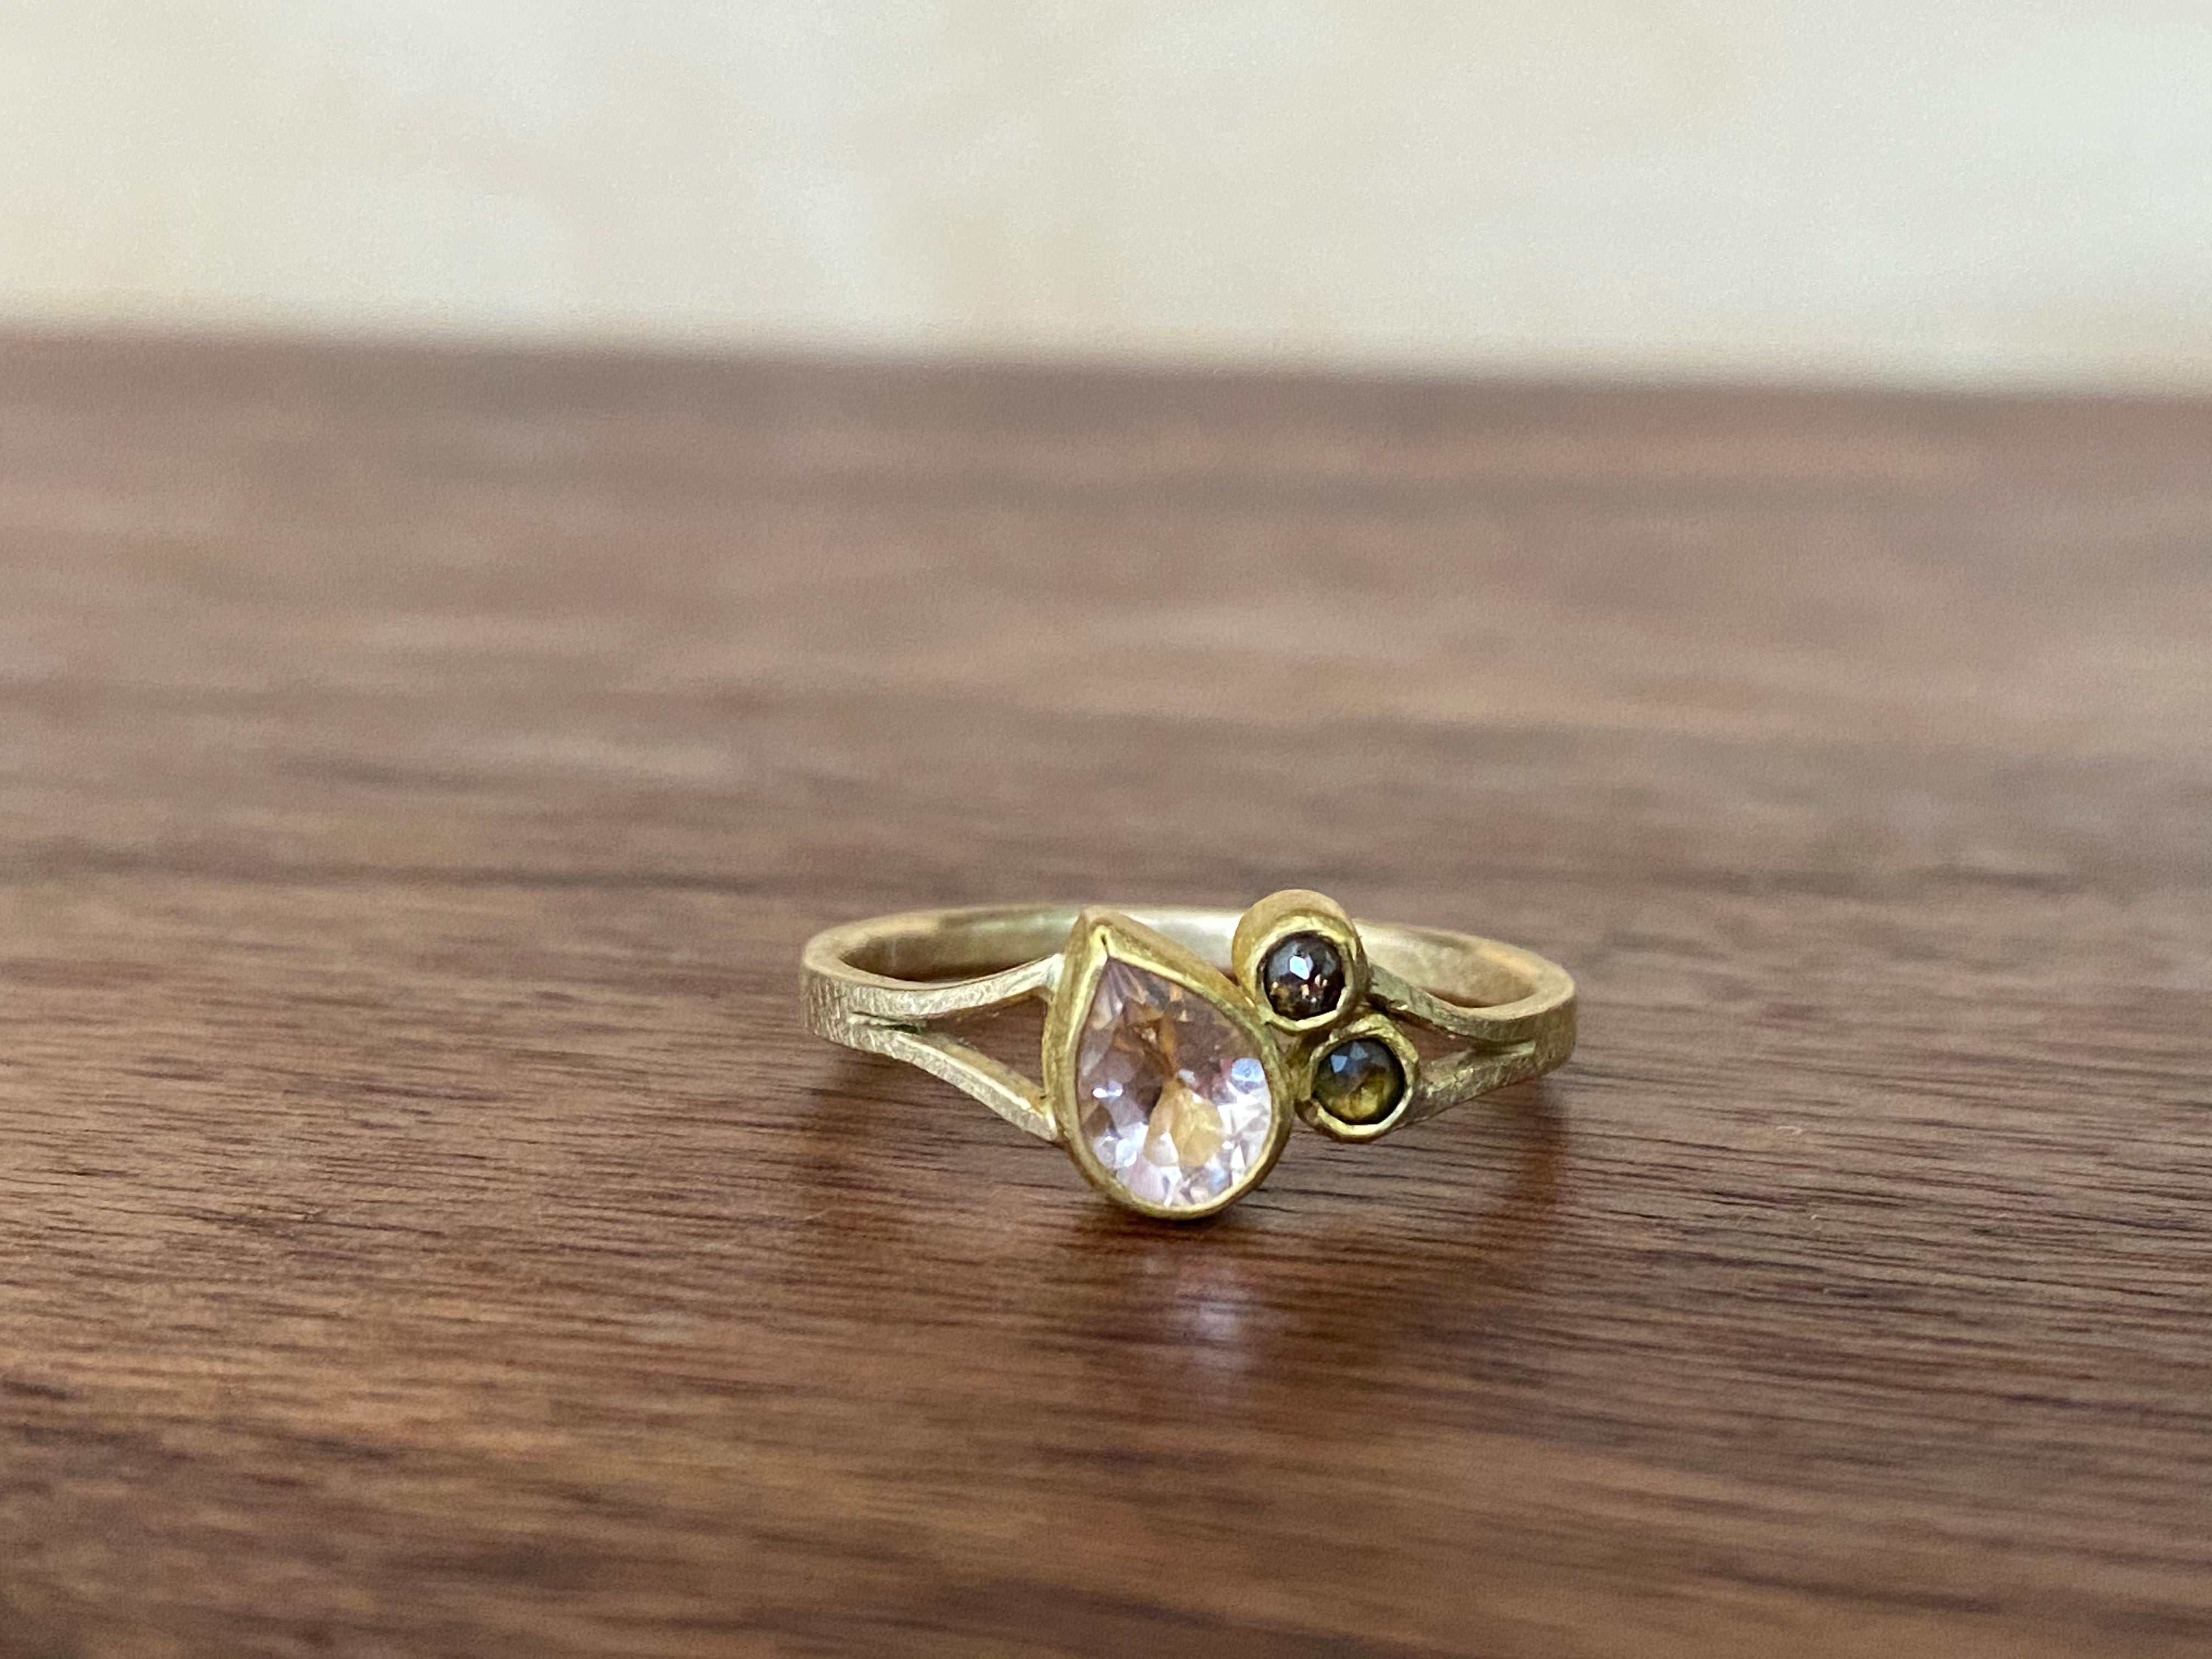 Siedra Loeffler- Morganite and Diamond Ring